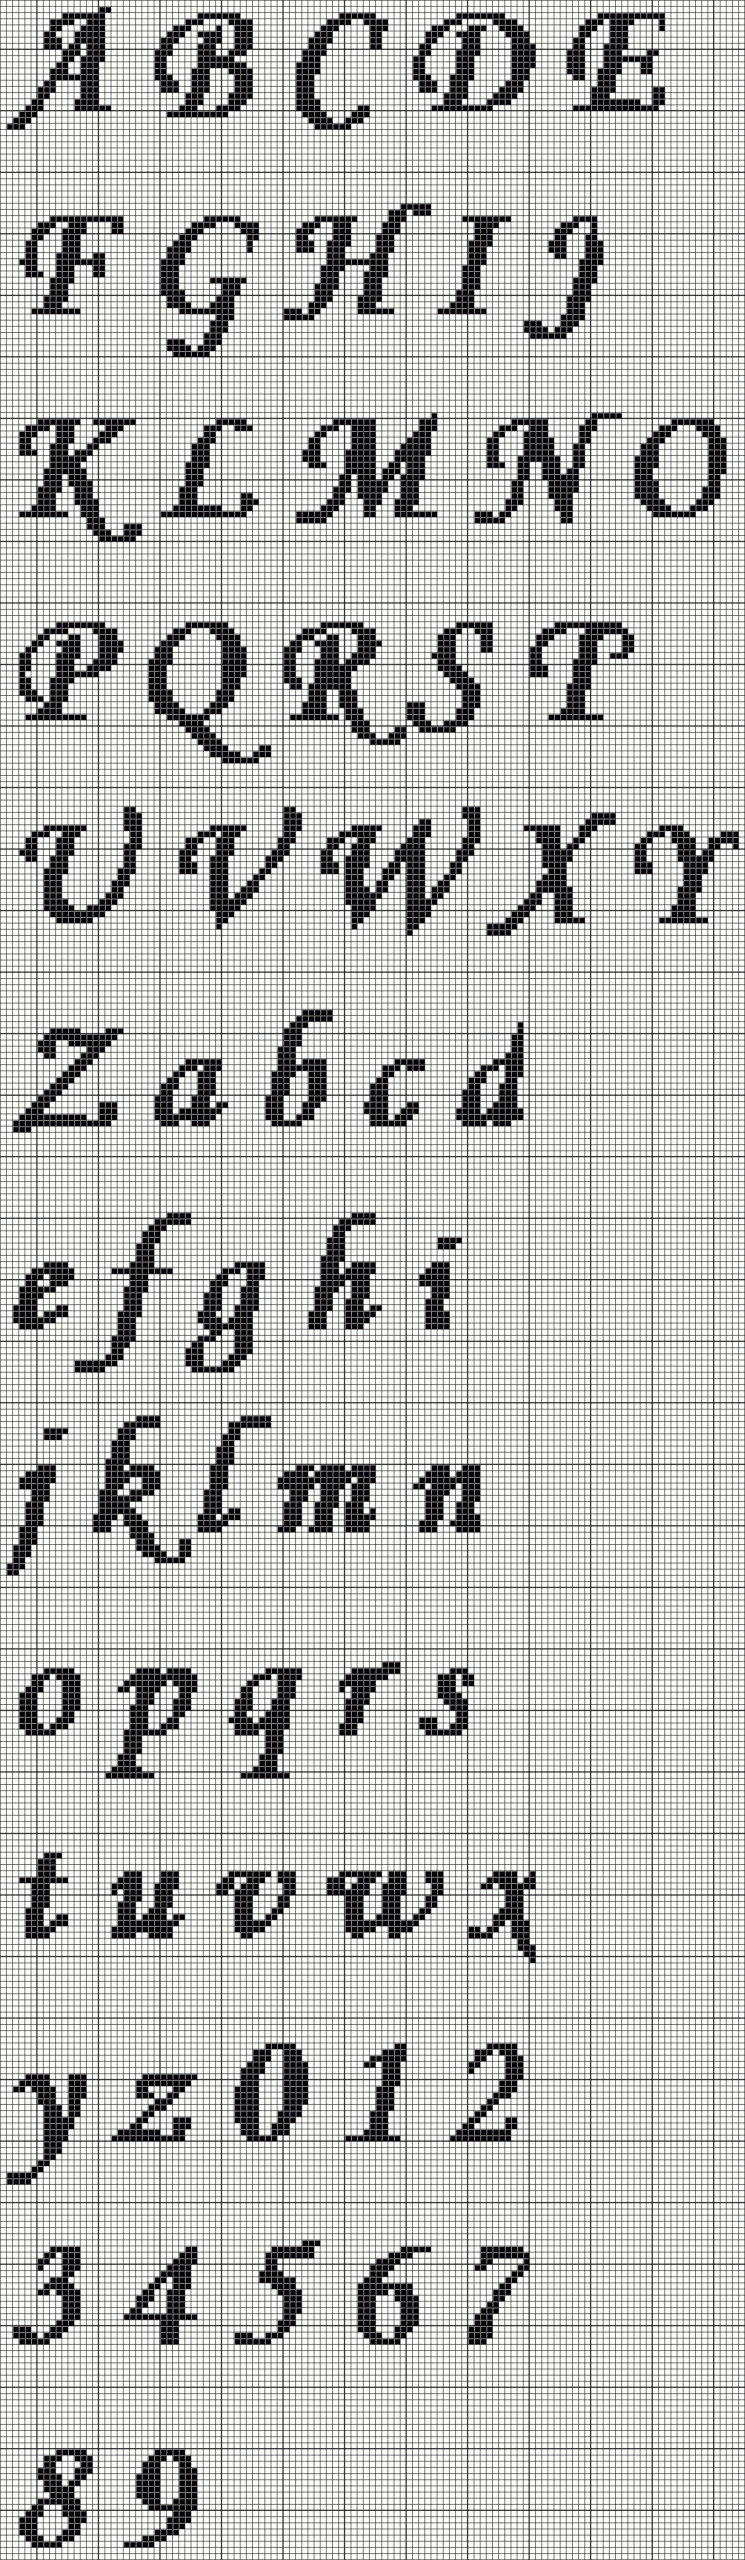 Left Col Here - Free Printable Alphabet Cross Stitch Patterns